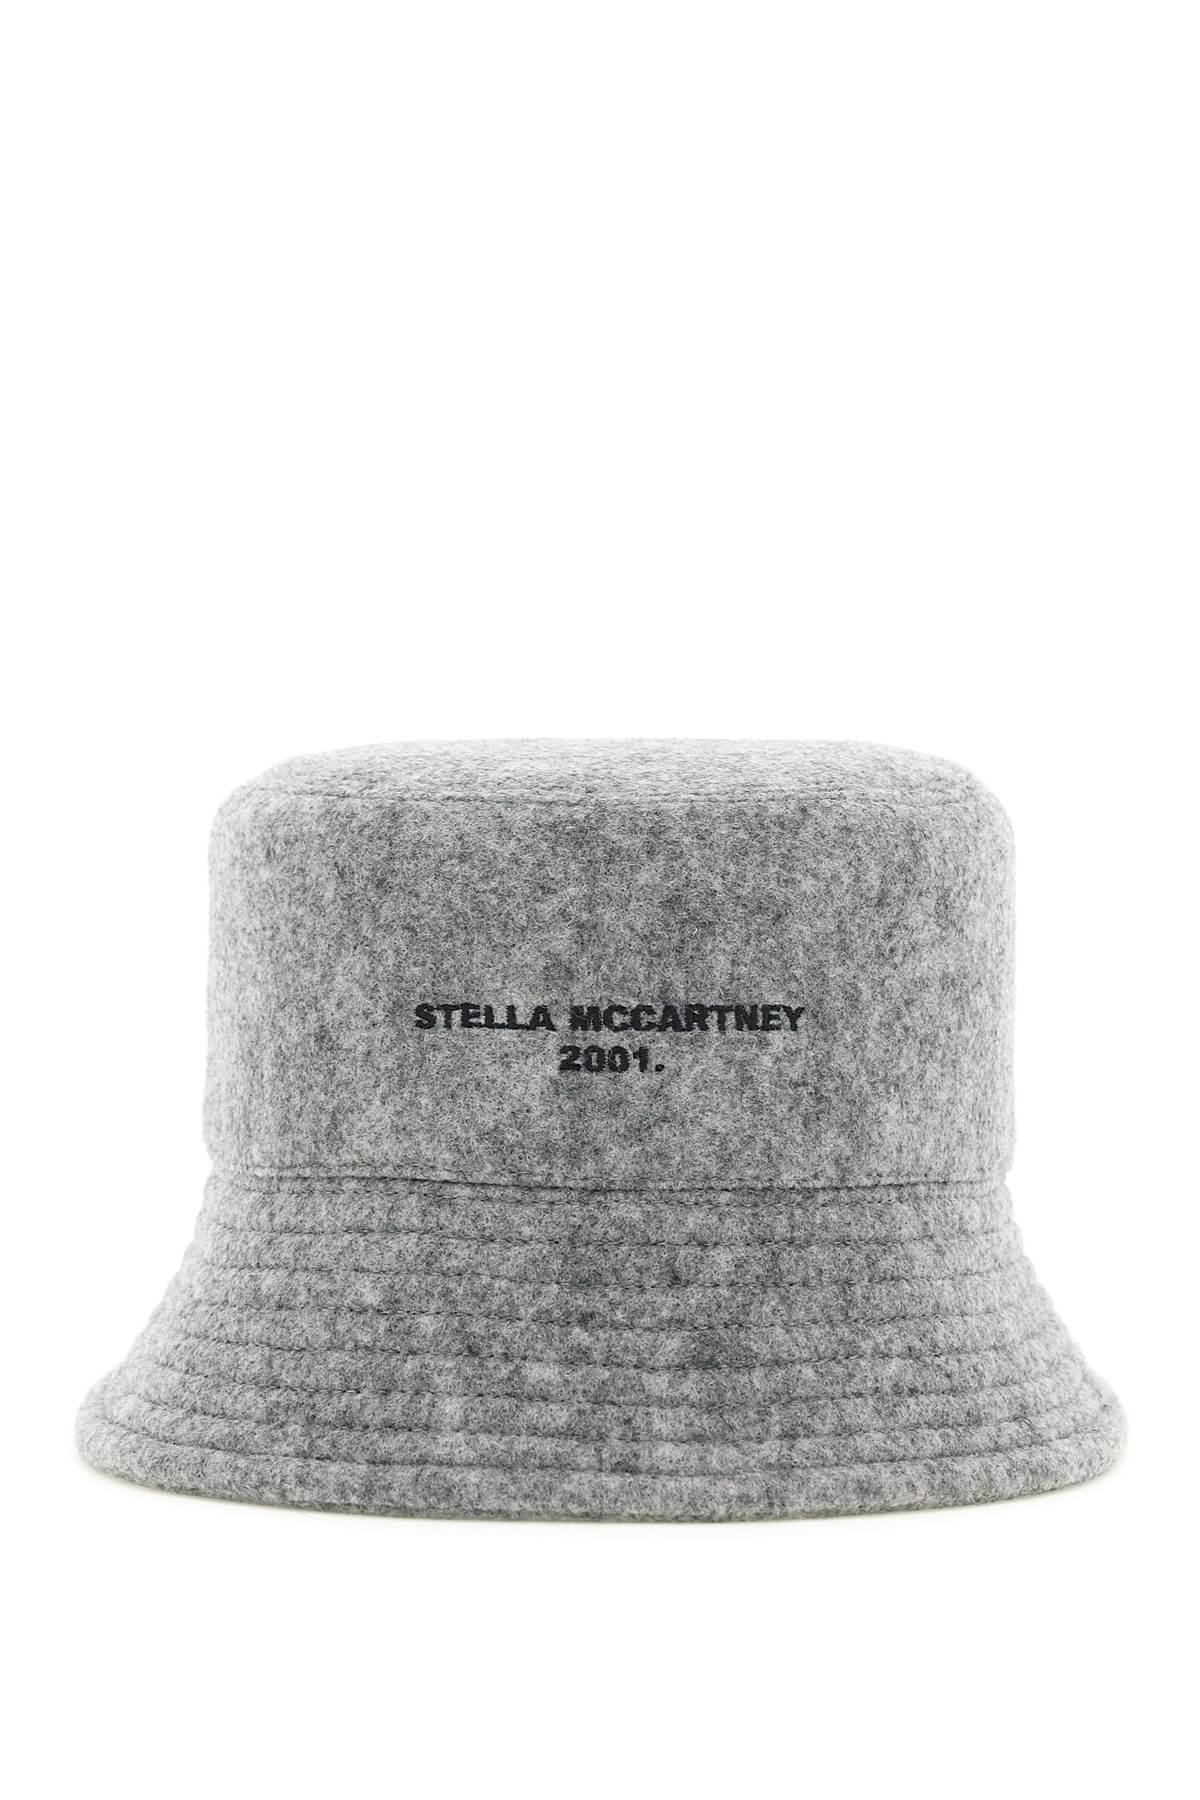 STELLA McCARTNEY FELT BUCKET HAT